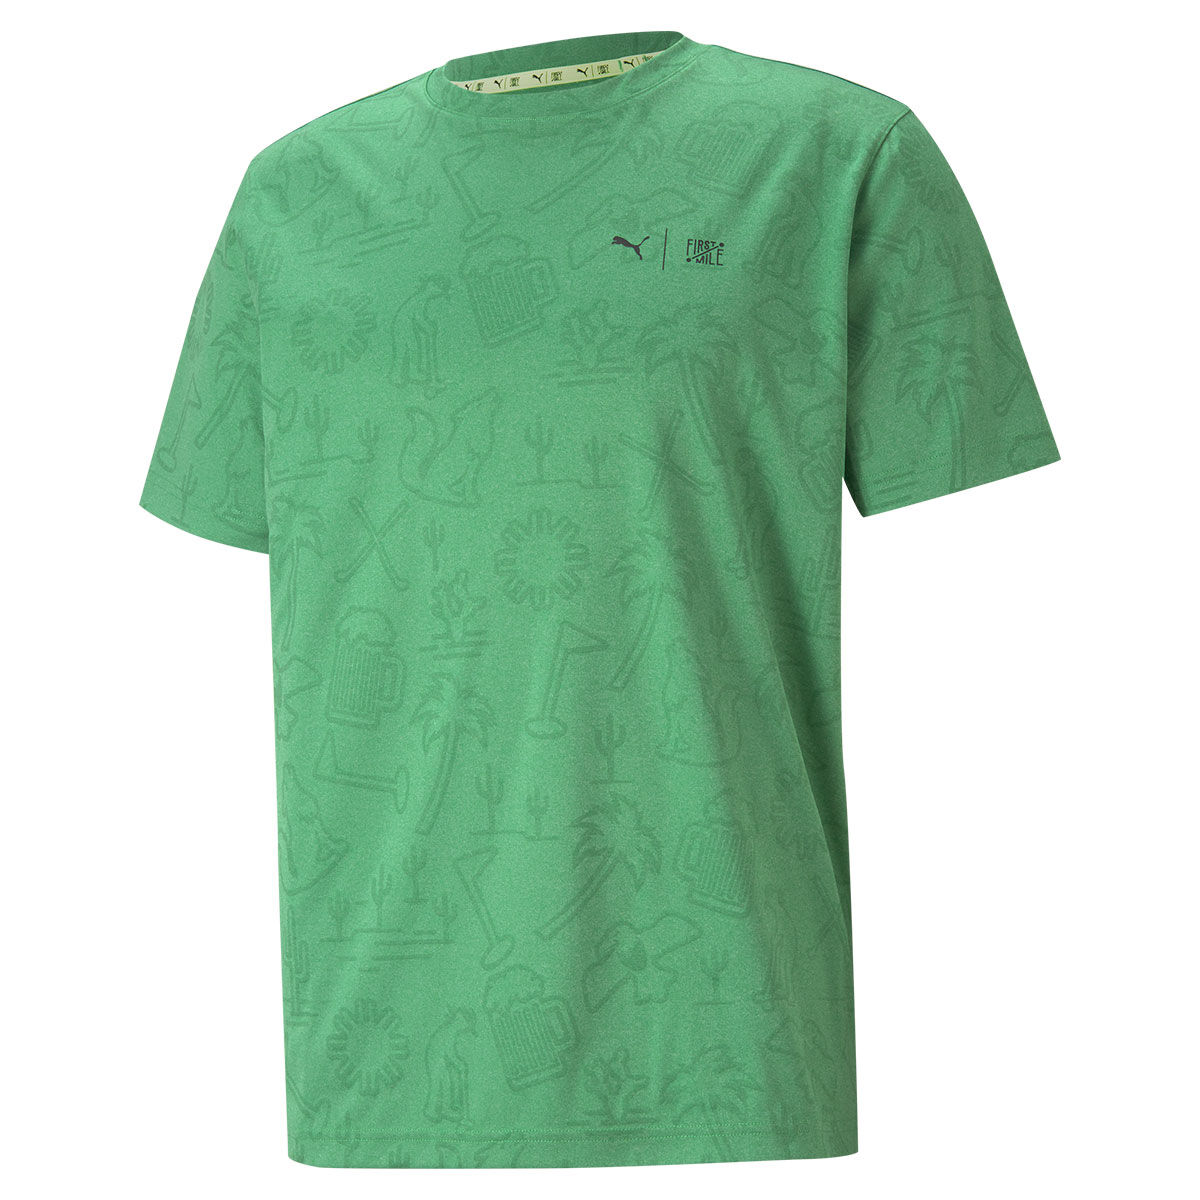 T-shirt PUMA Golf First Mile Flash, homme, Petit, Amazon green heather | Online Golf